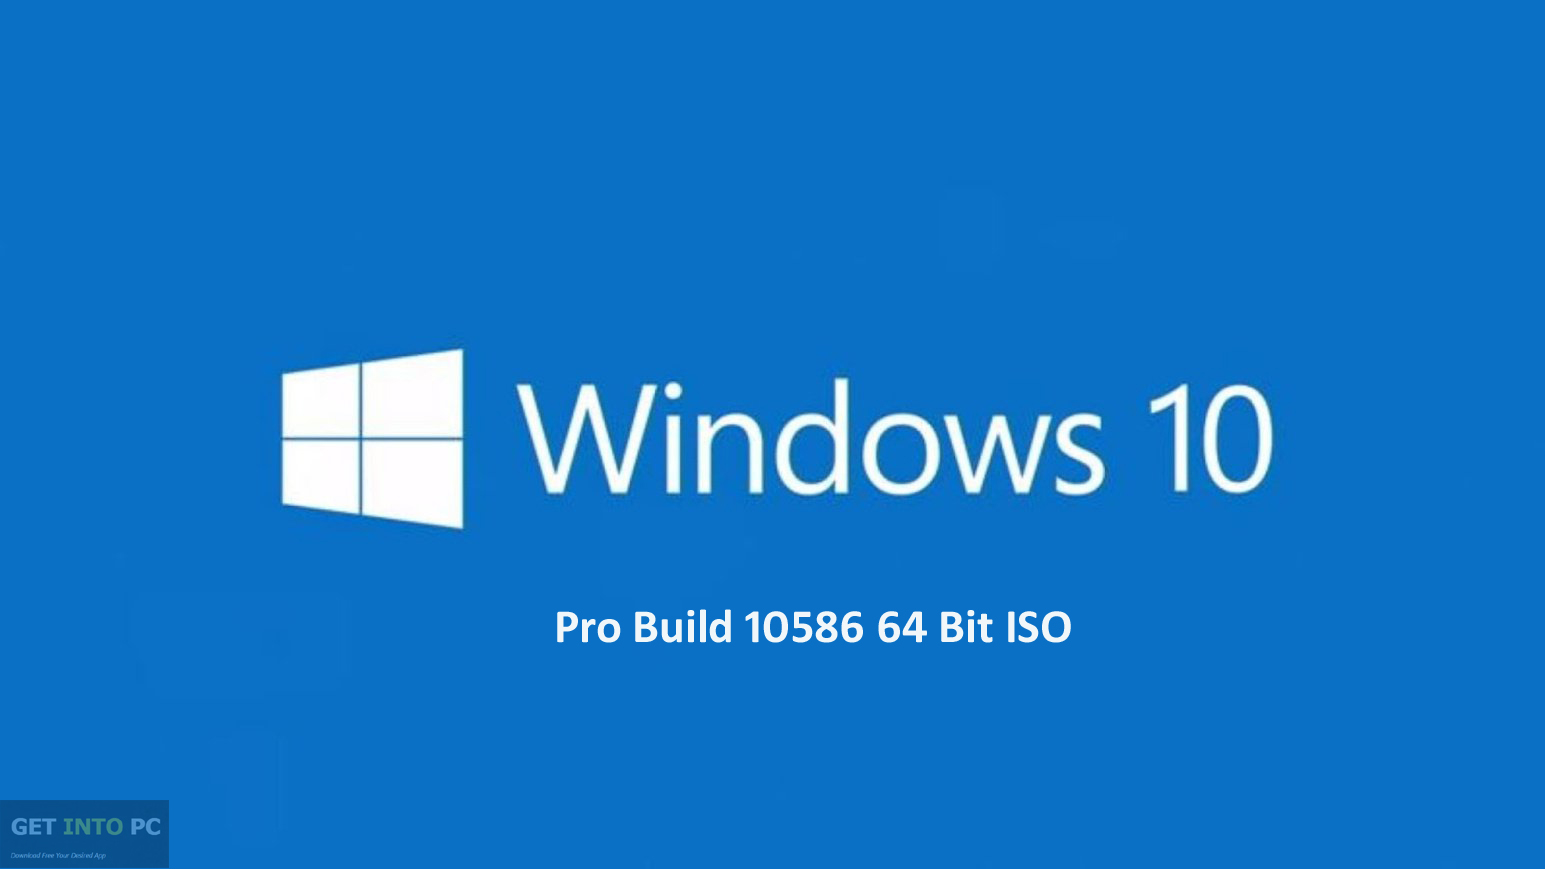 windows 10 pro iso free download full version